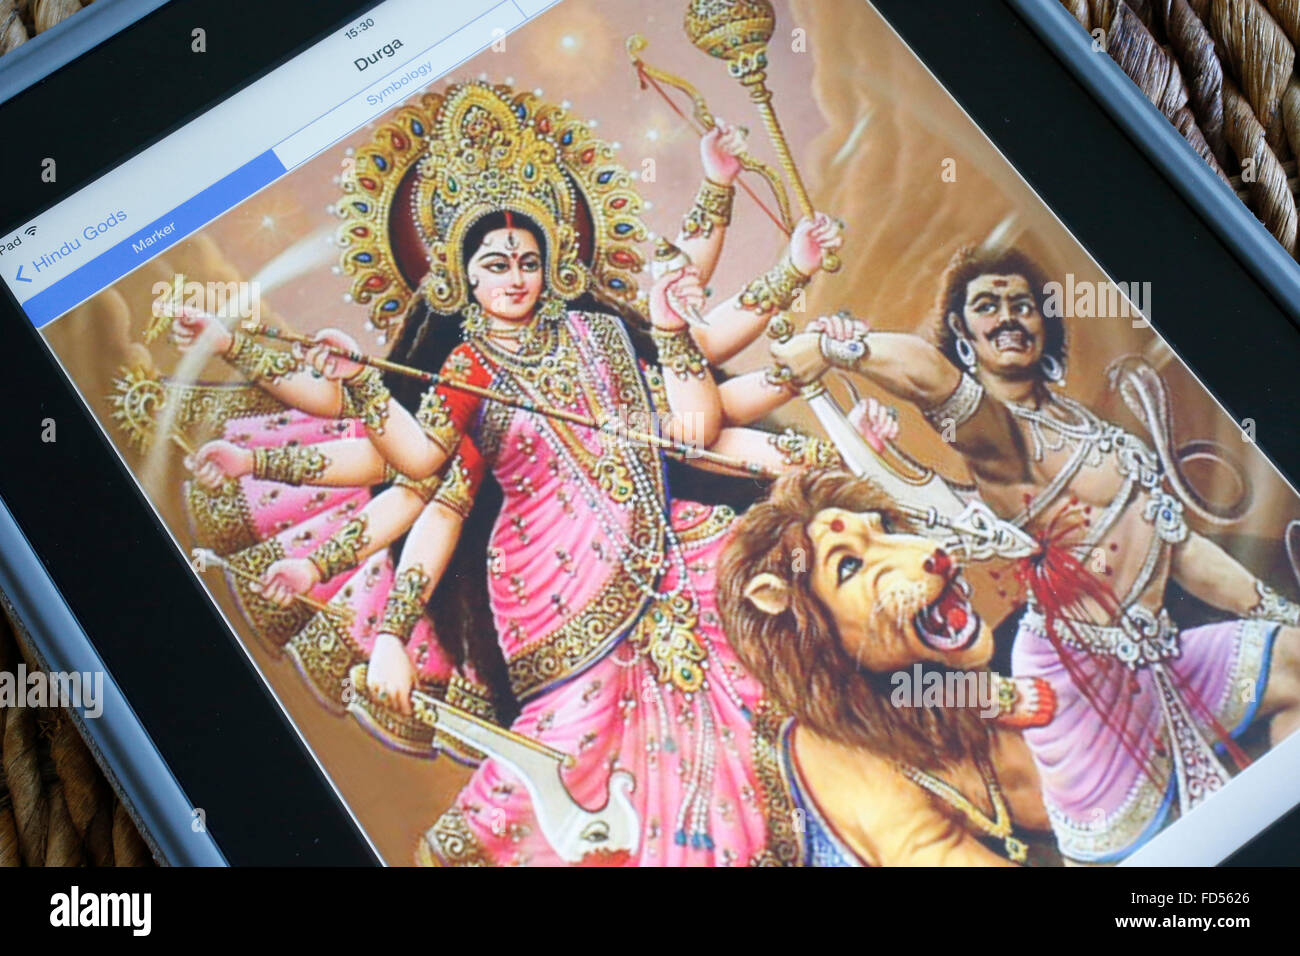 Hindu deity on an Ipad. Durga. Stock Photo